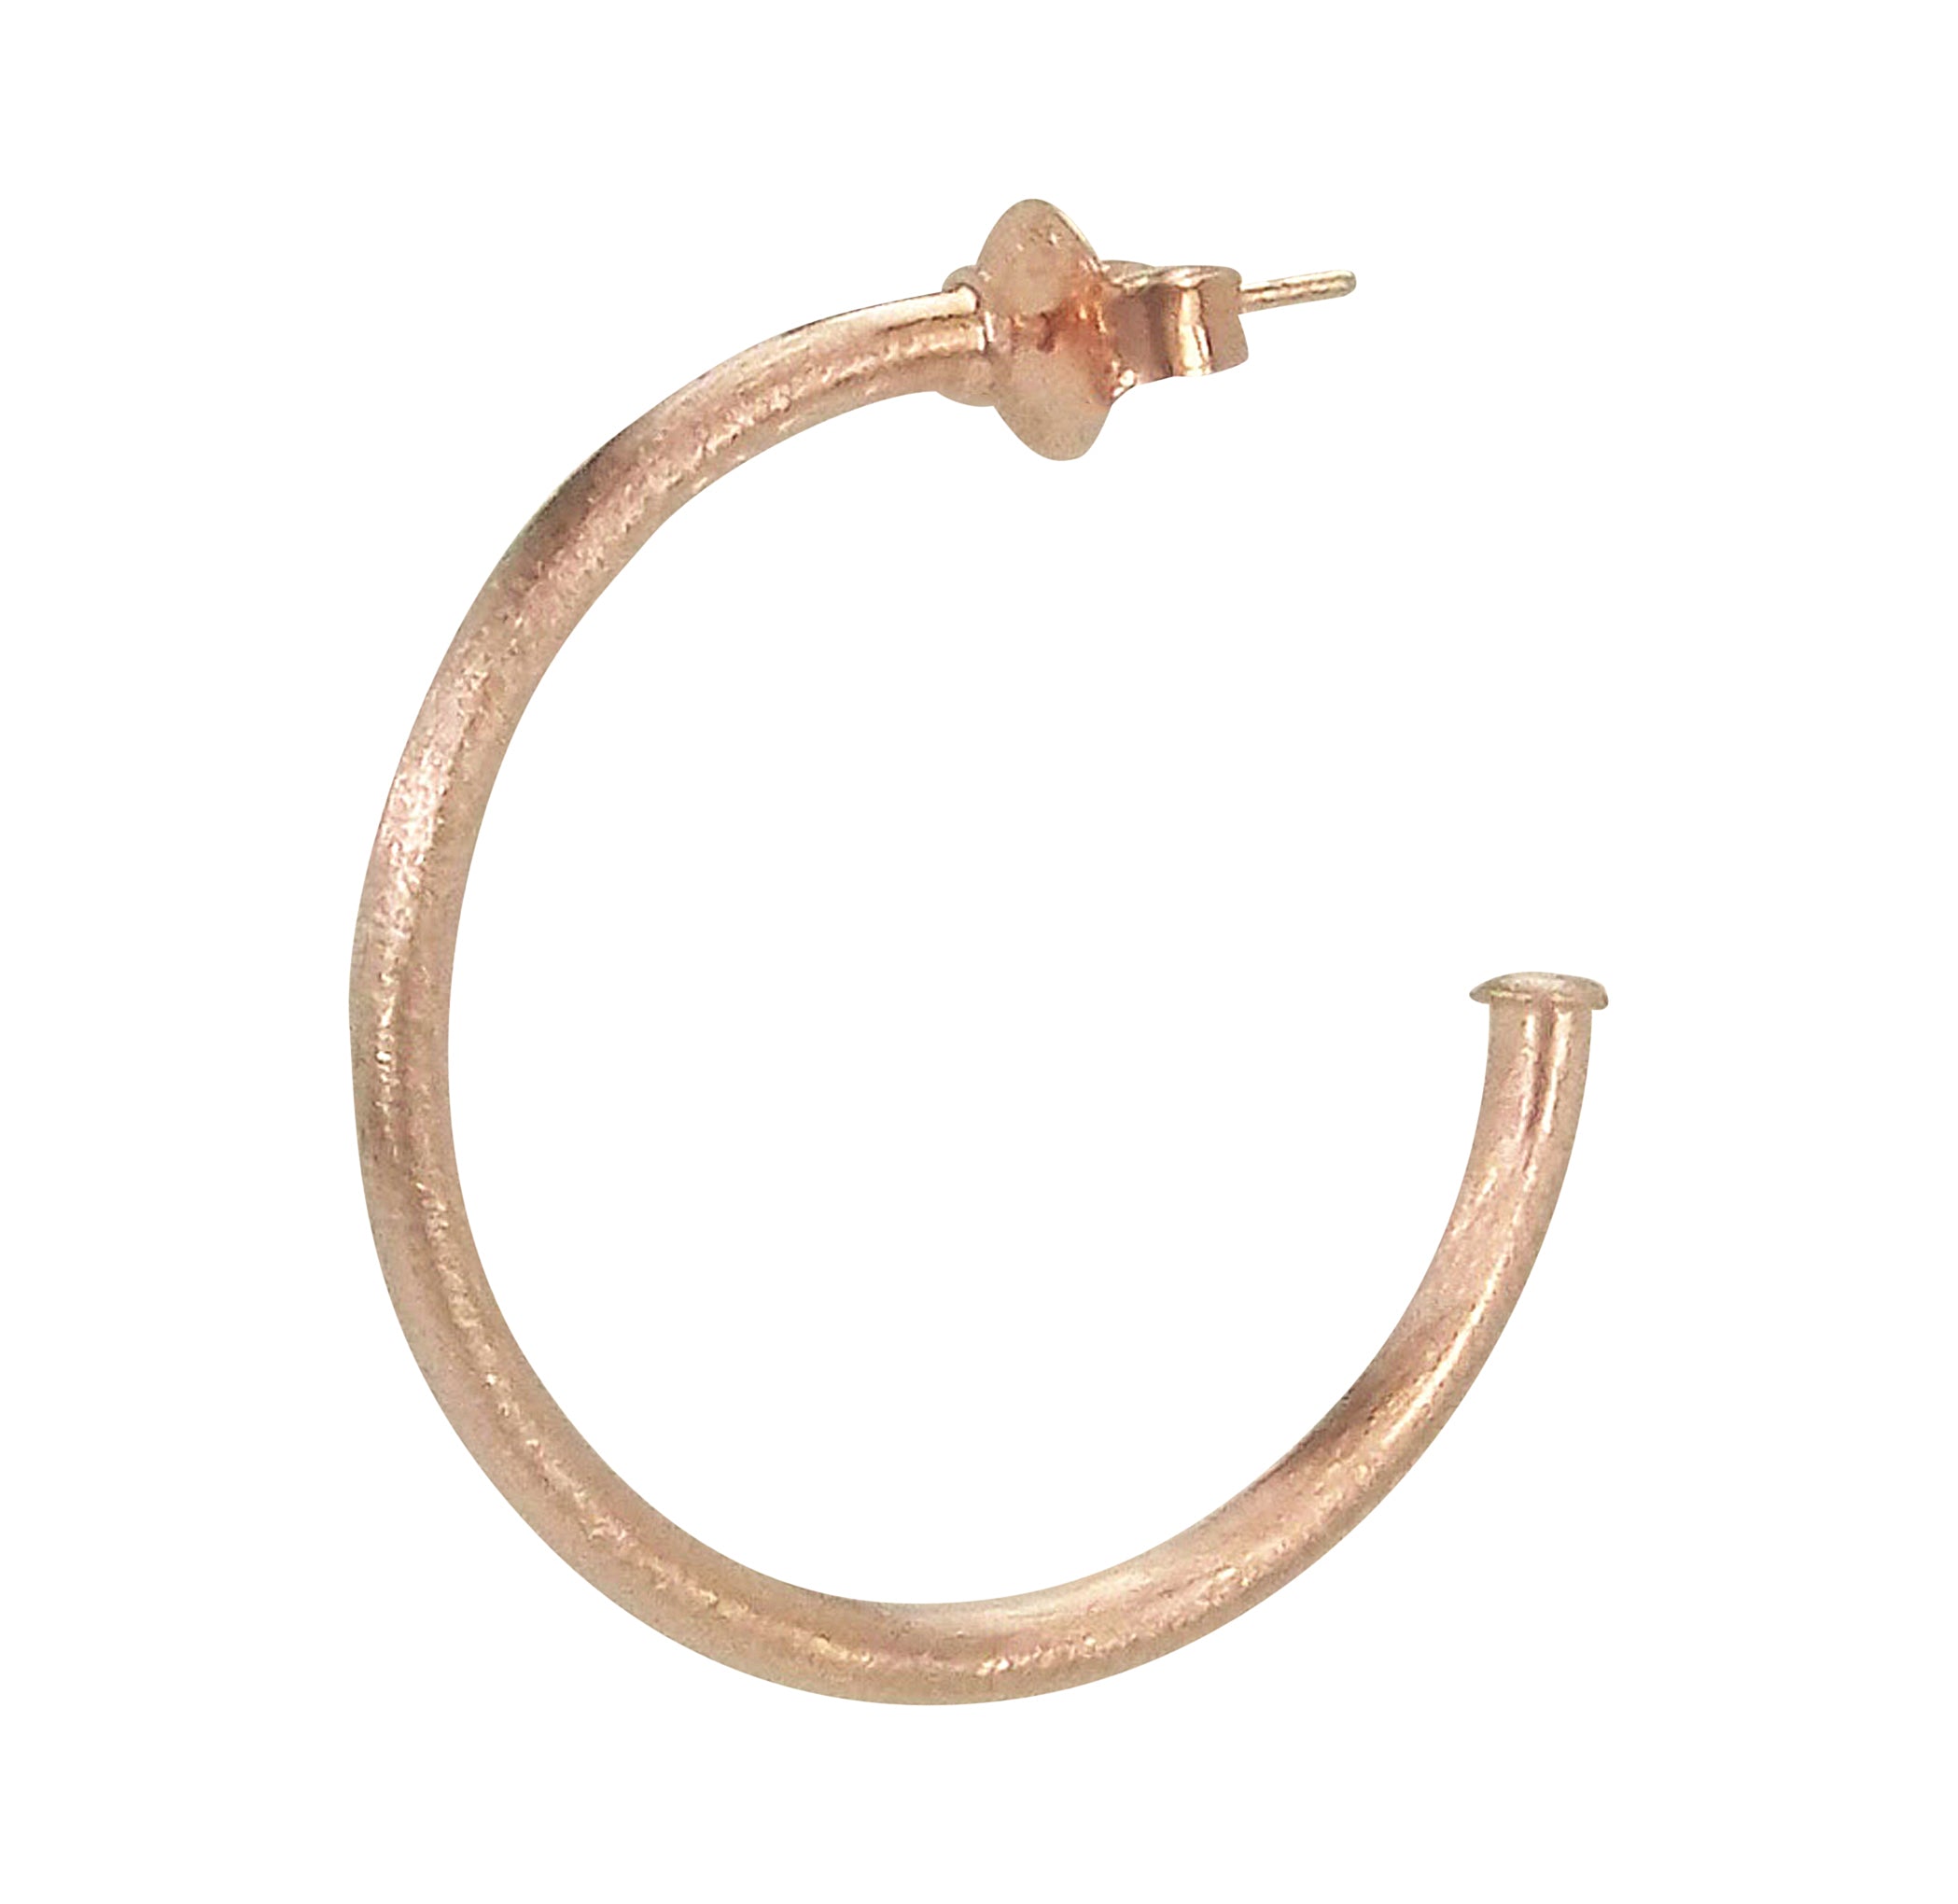 Sheila Fajl Petite Favorite Hoop Earrings in Rose Gold Plated